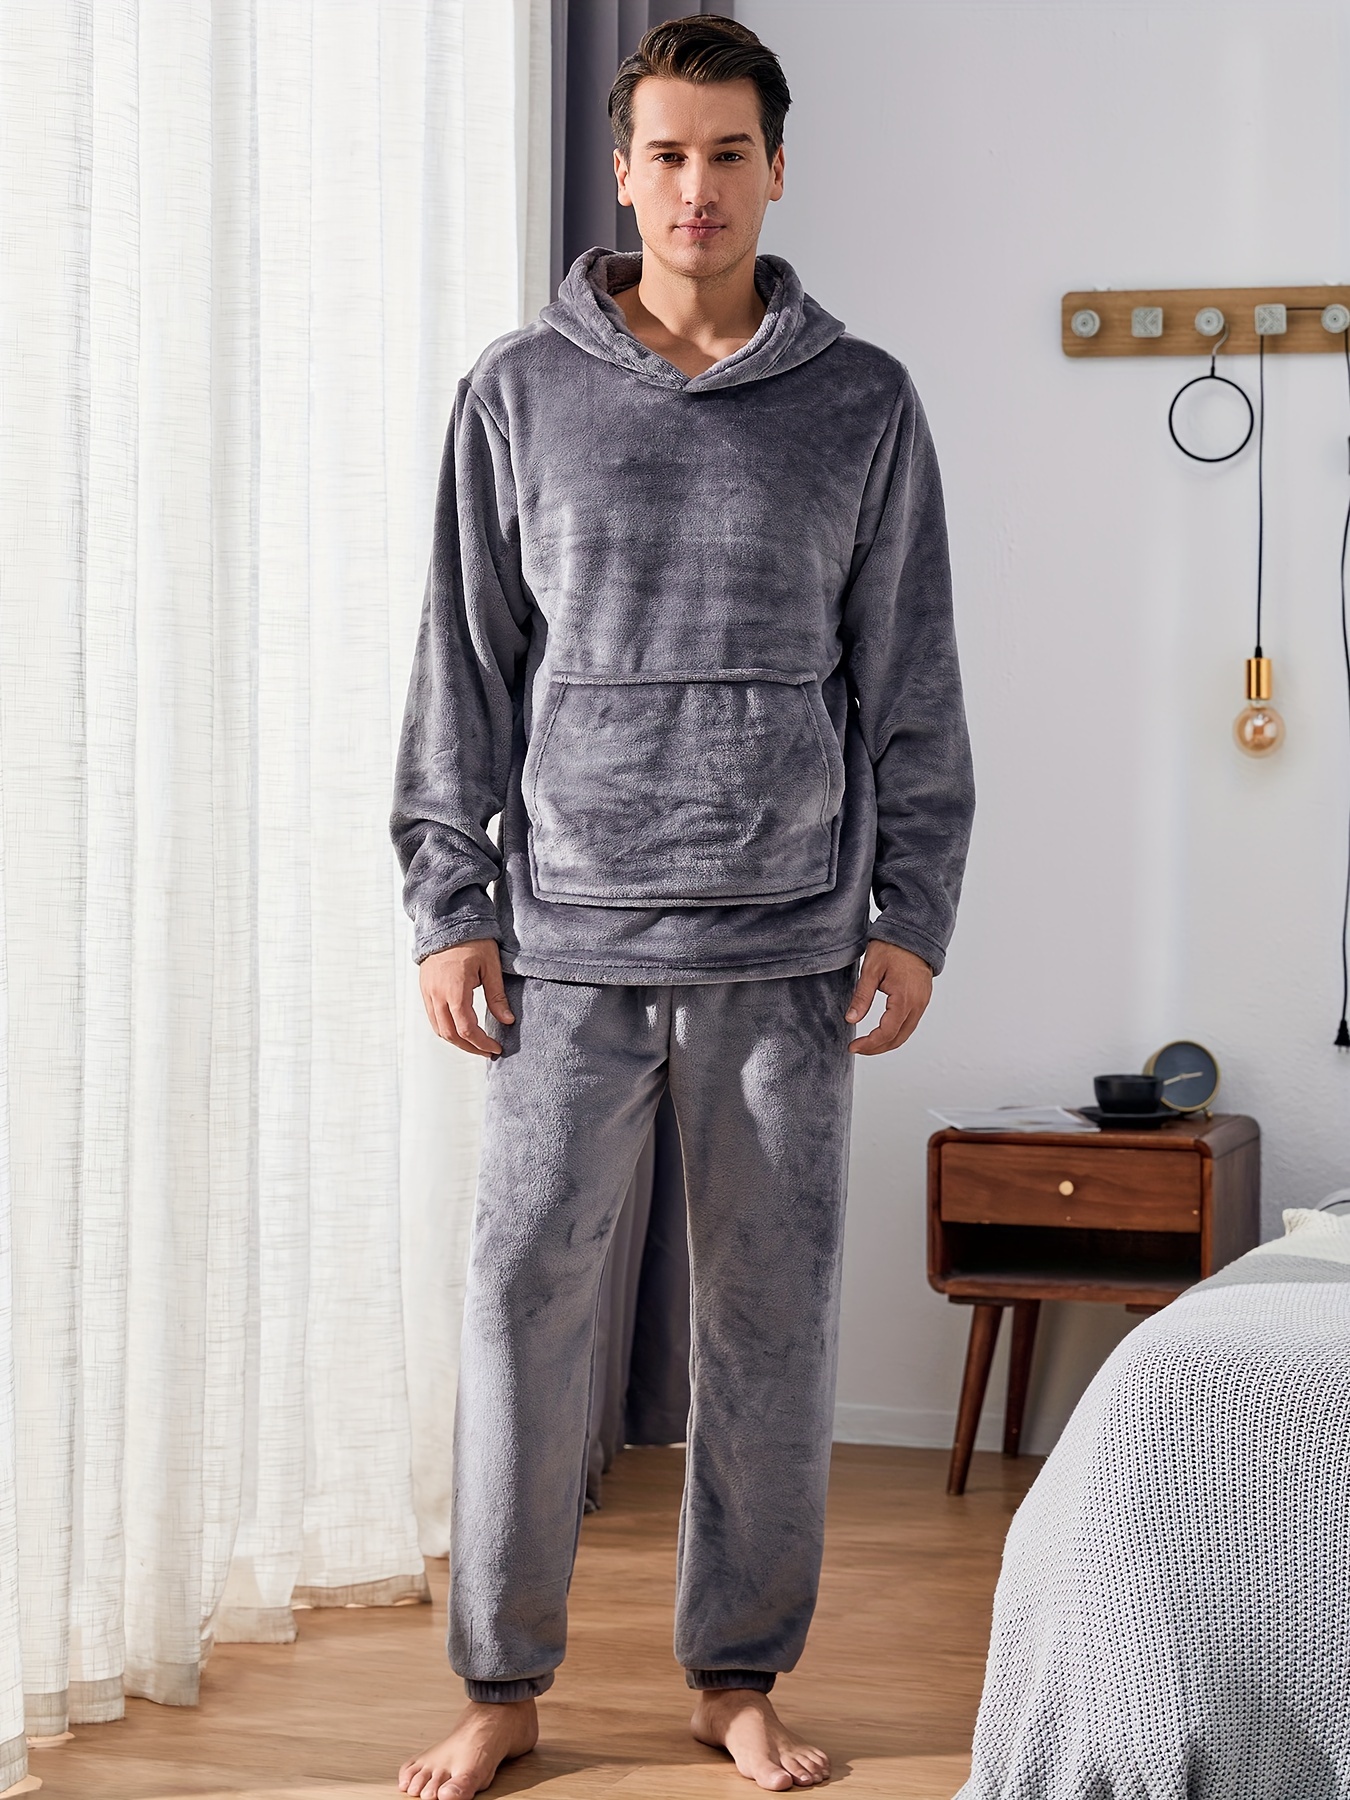 Nueva ropa interior térmica para hombre de invierno calidas modernas